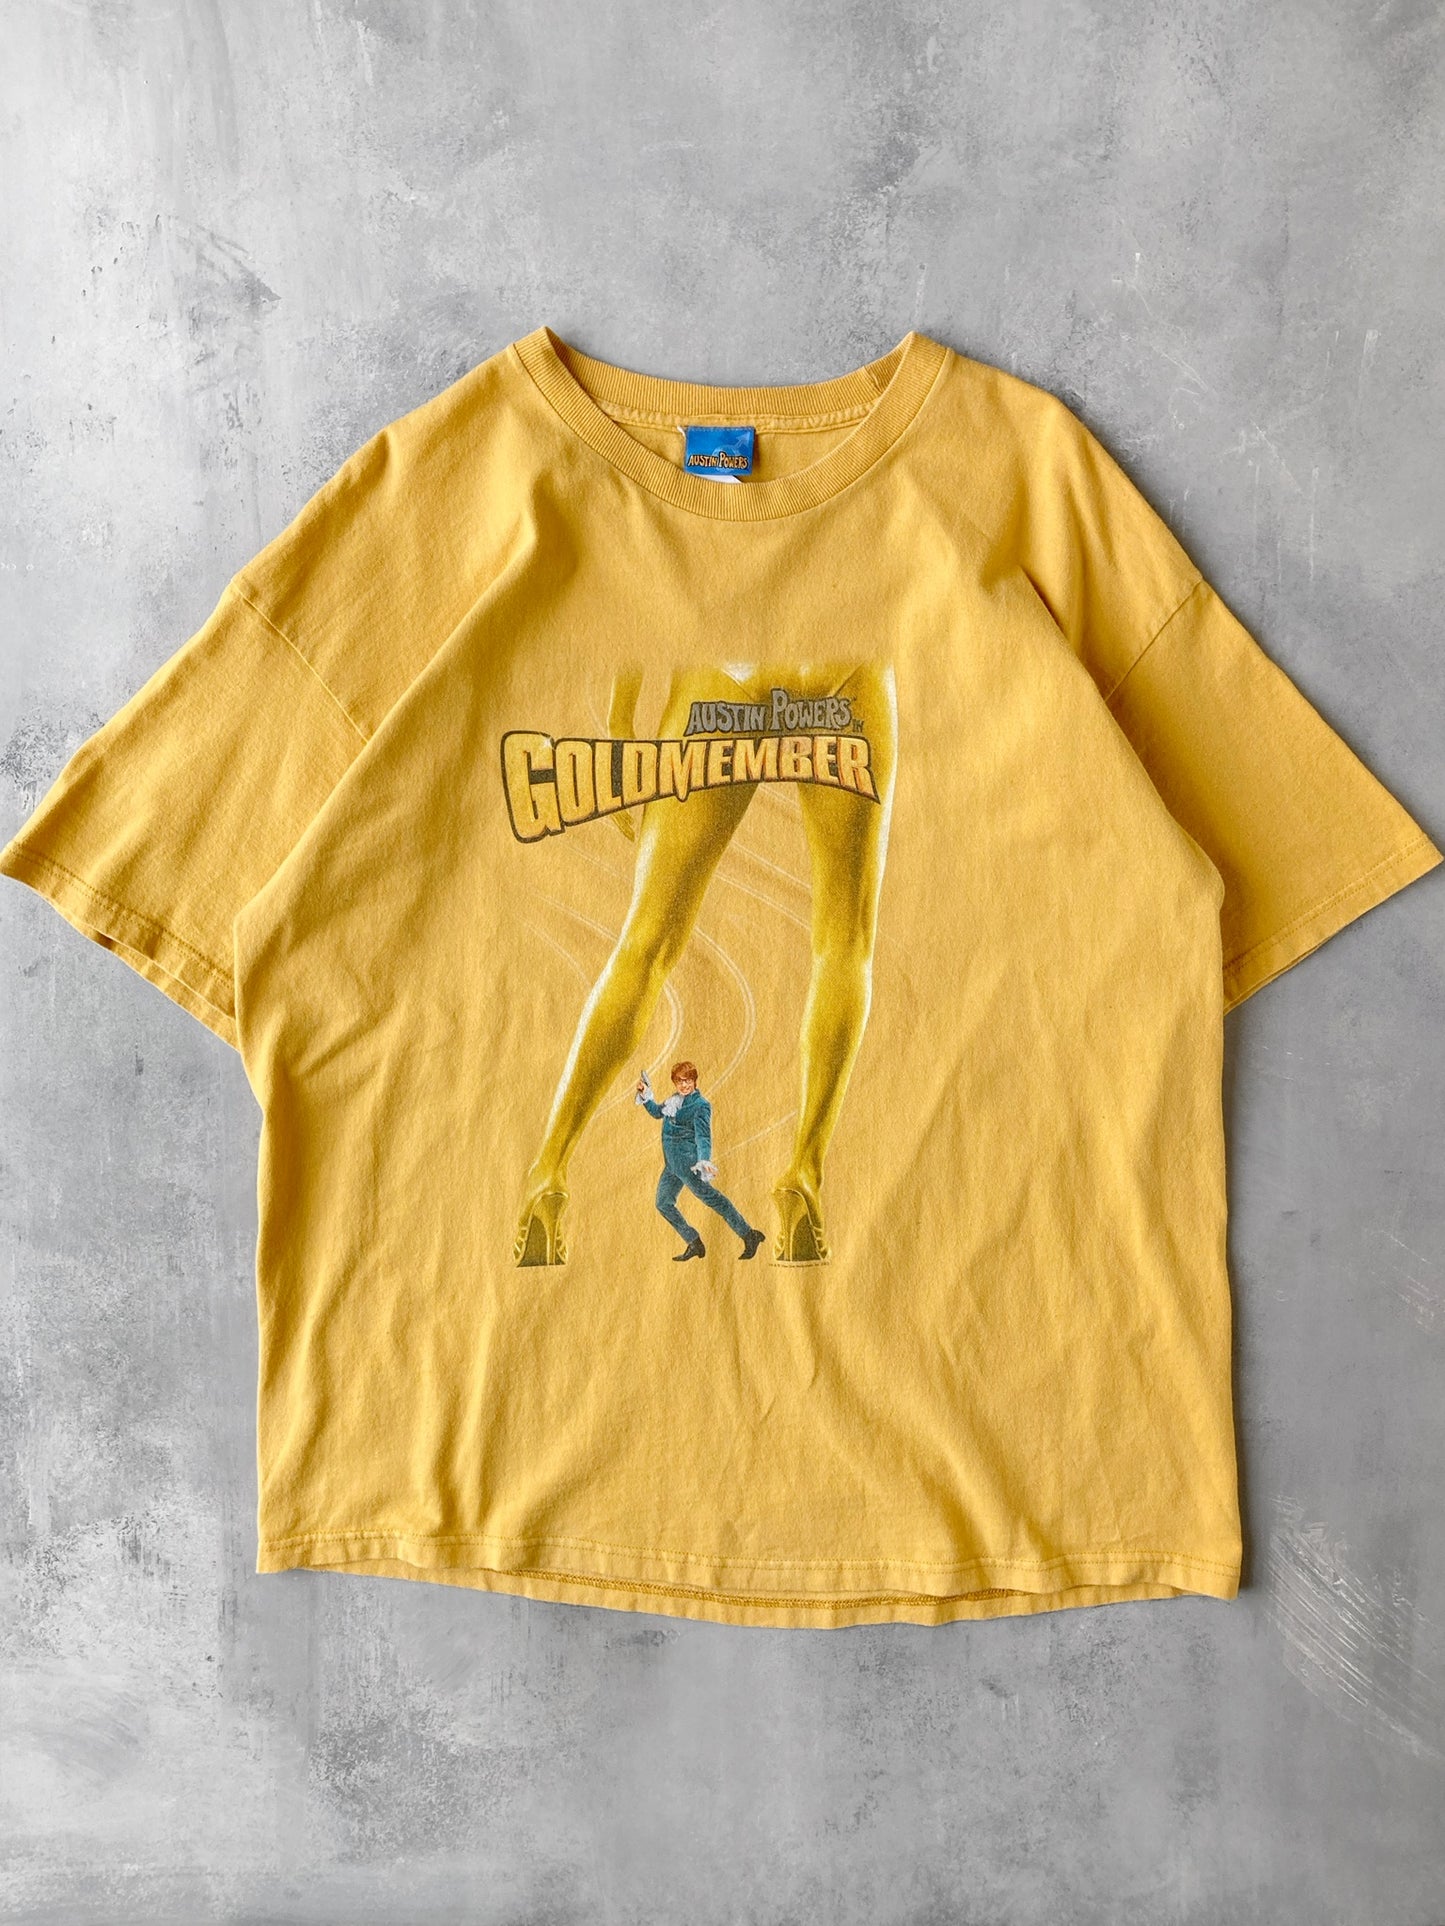 Austin Powers Goldmember Promotional T-Shirt 00's - XL